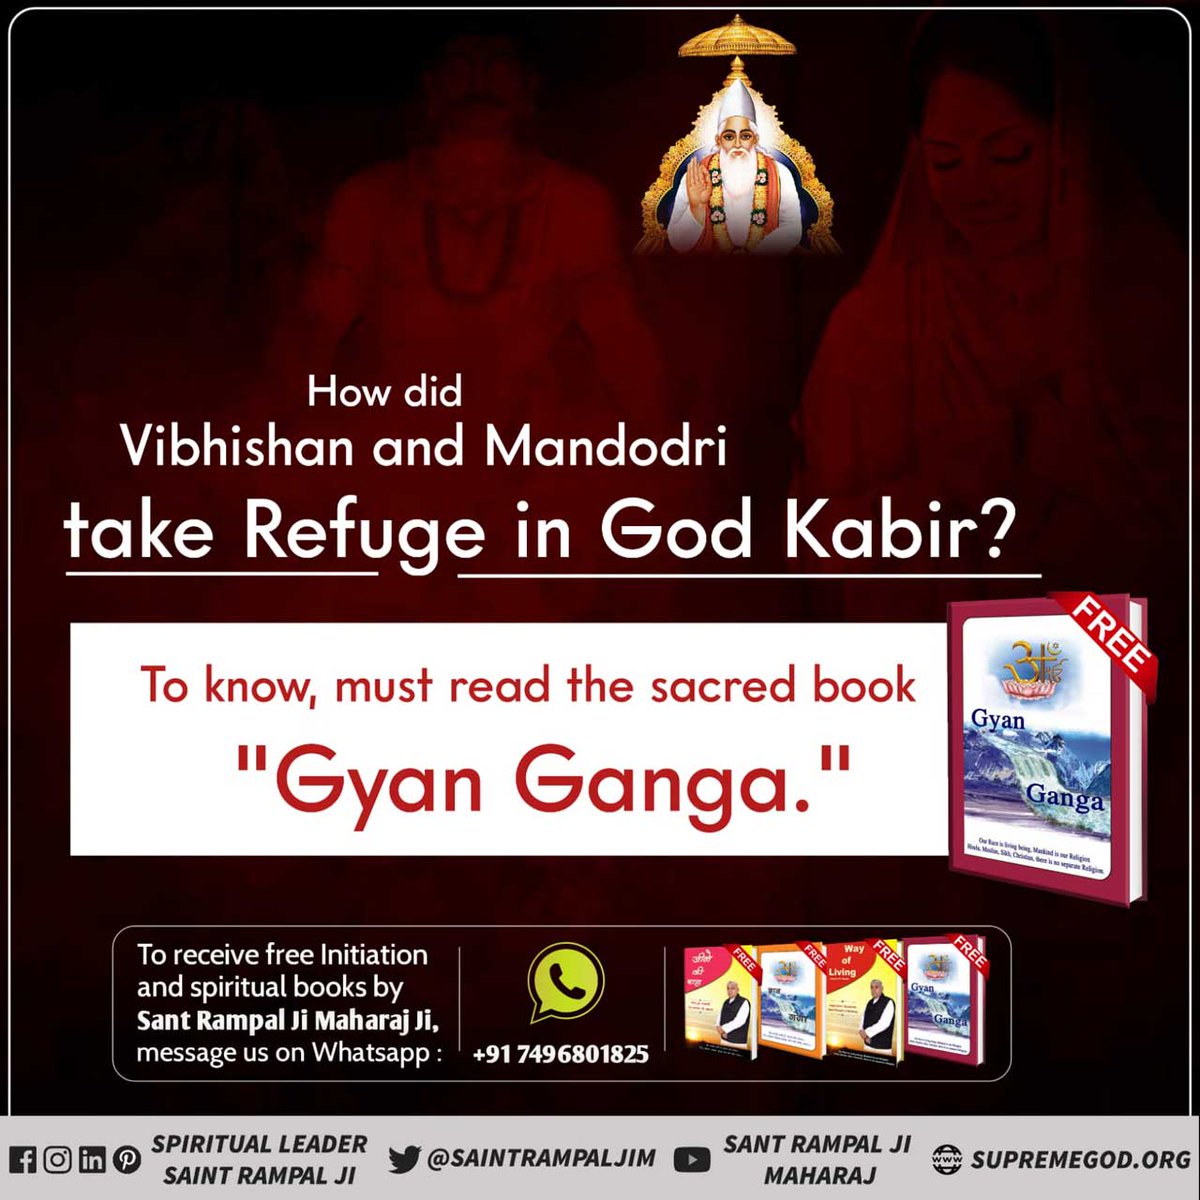 #GodMorningTuesday
How did
Vibhishan and Mandodri
take Refuge in God Kabir?
To know more must read the previous book 'Gyan Ganga'' by Sant Rampal Ji Maharaj
Visit Satlok Ashram YouTube Channel
#GyanGanga #tuesdayvibe